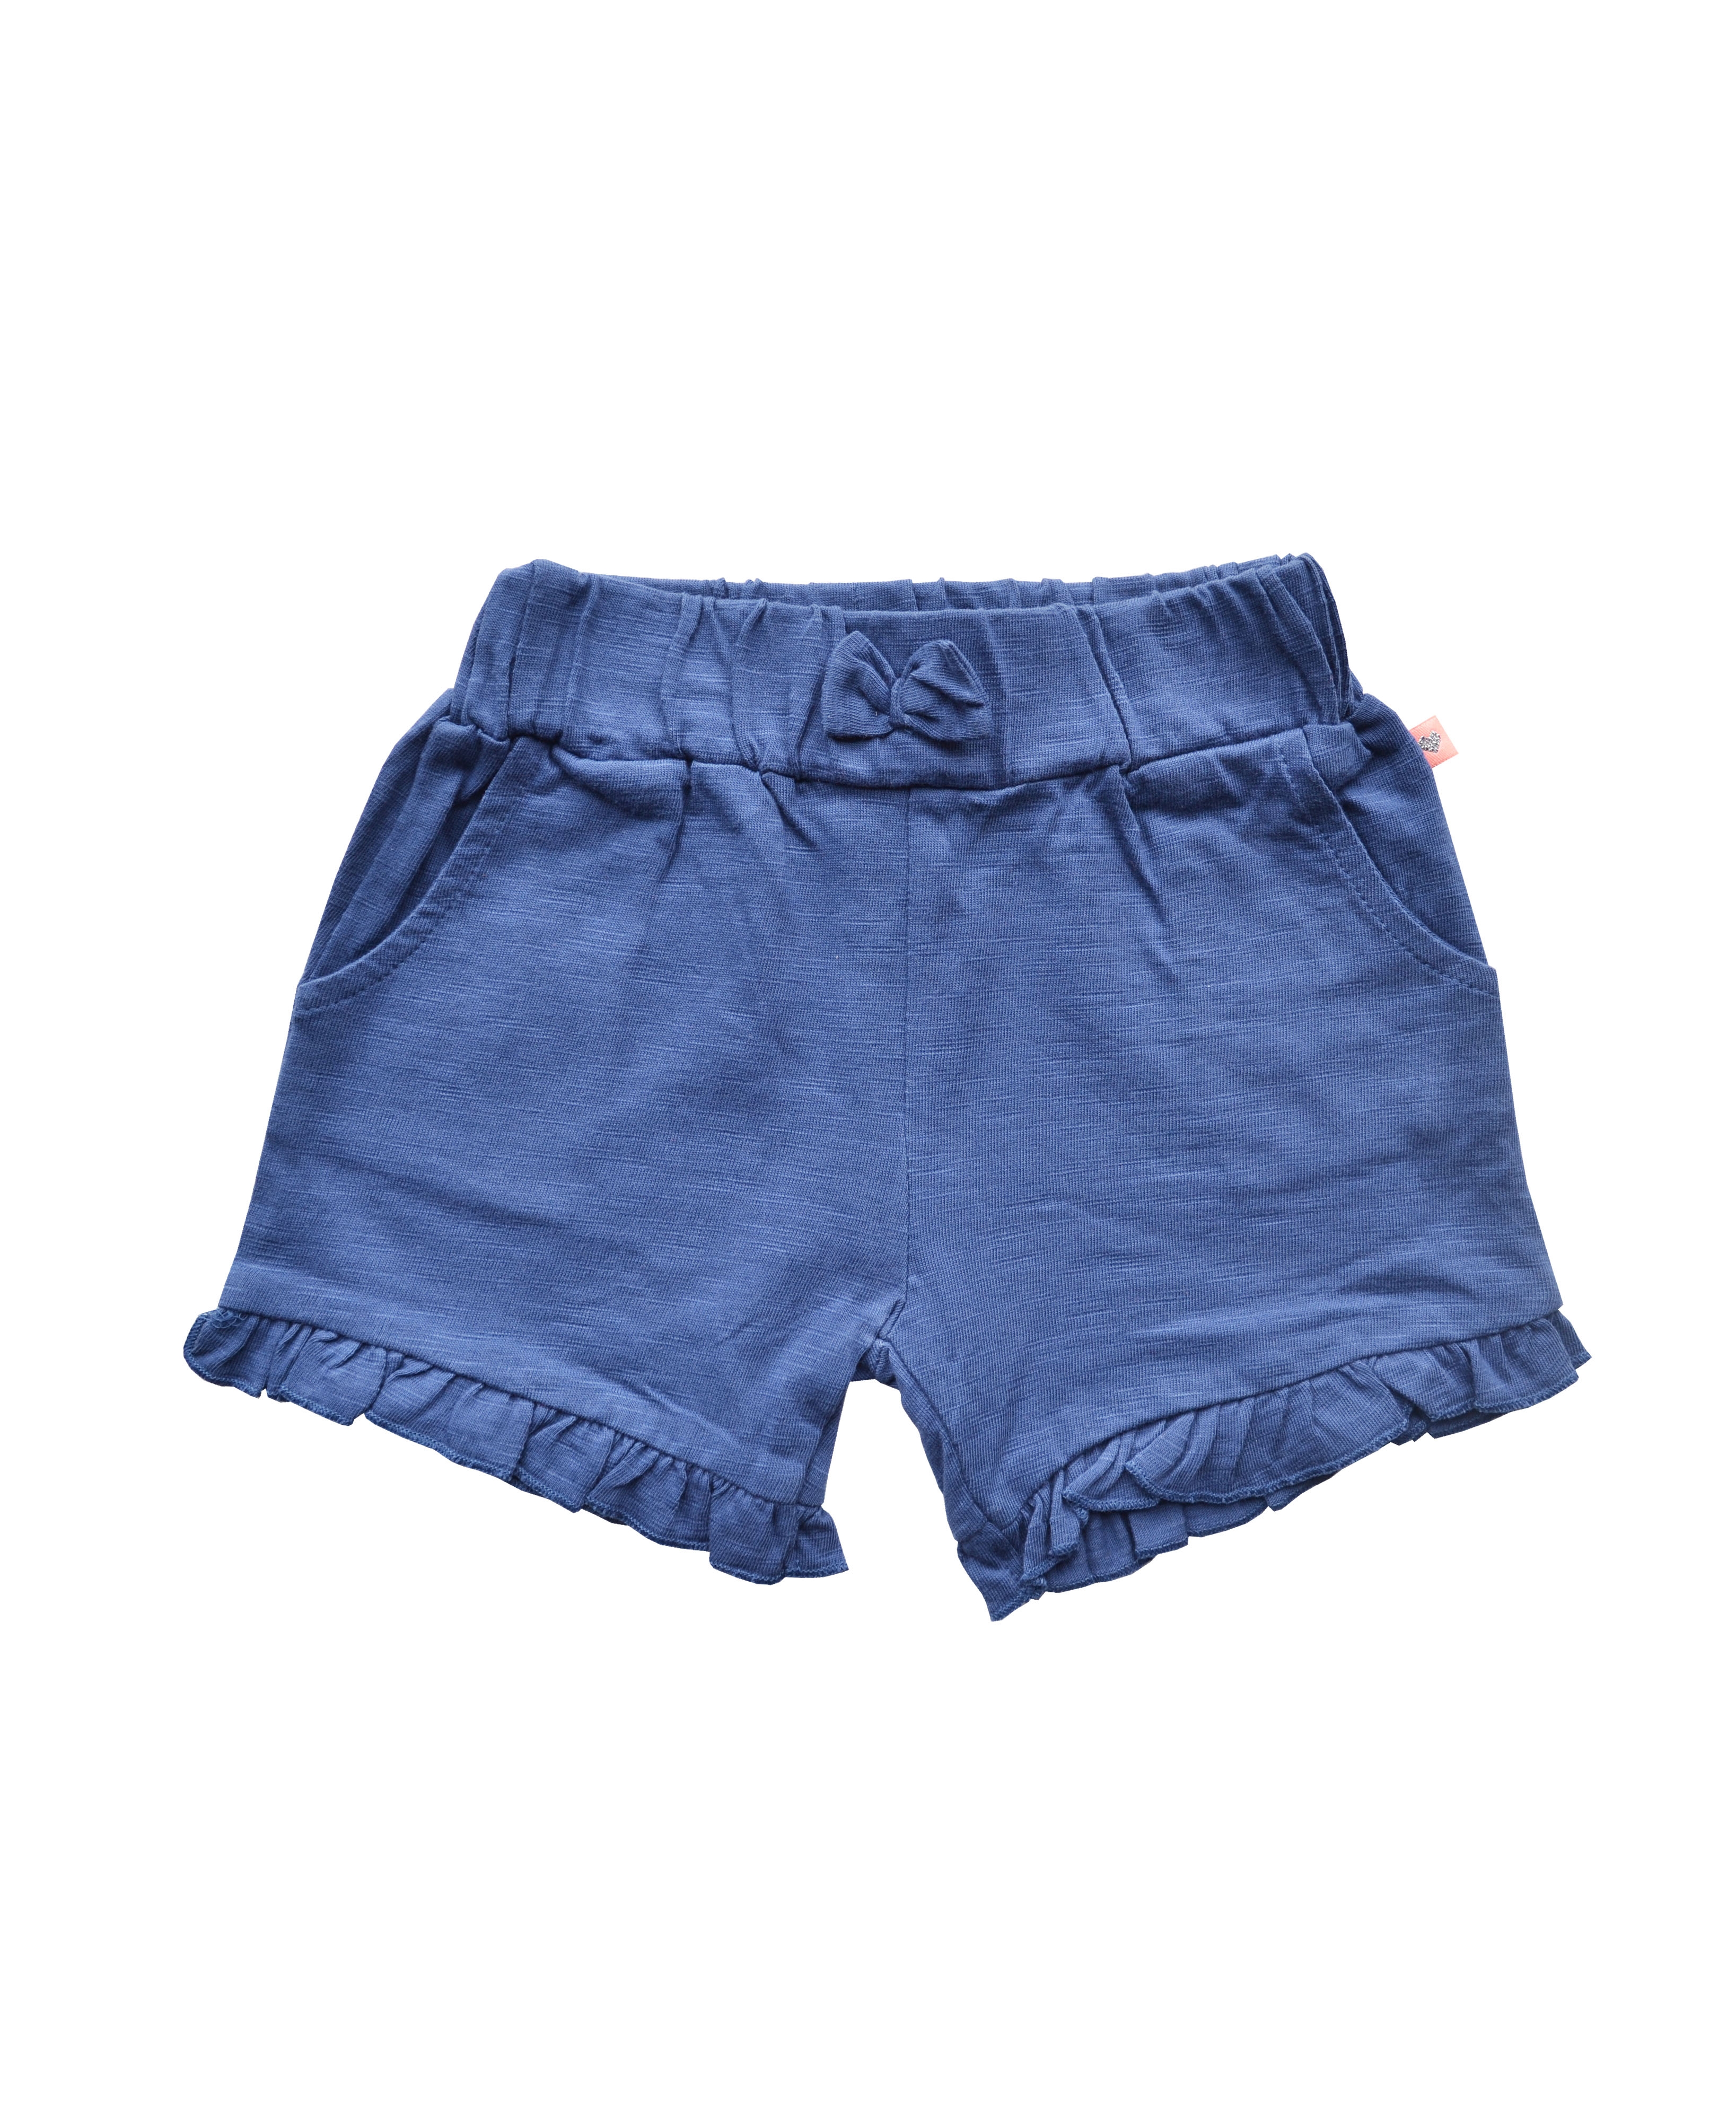 Navy Girls Shorts (100% Cotton Single Jersey)